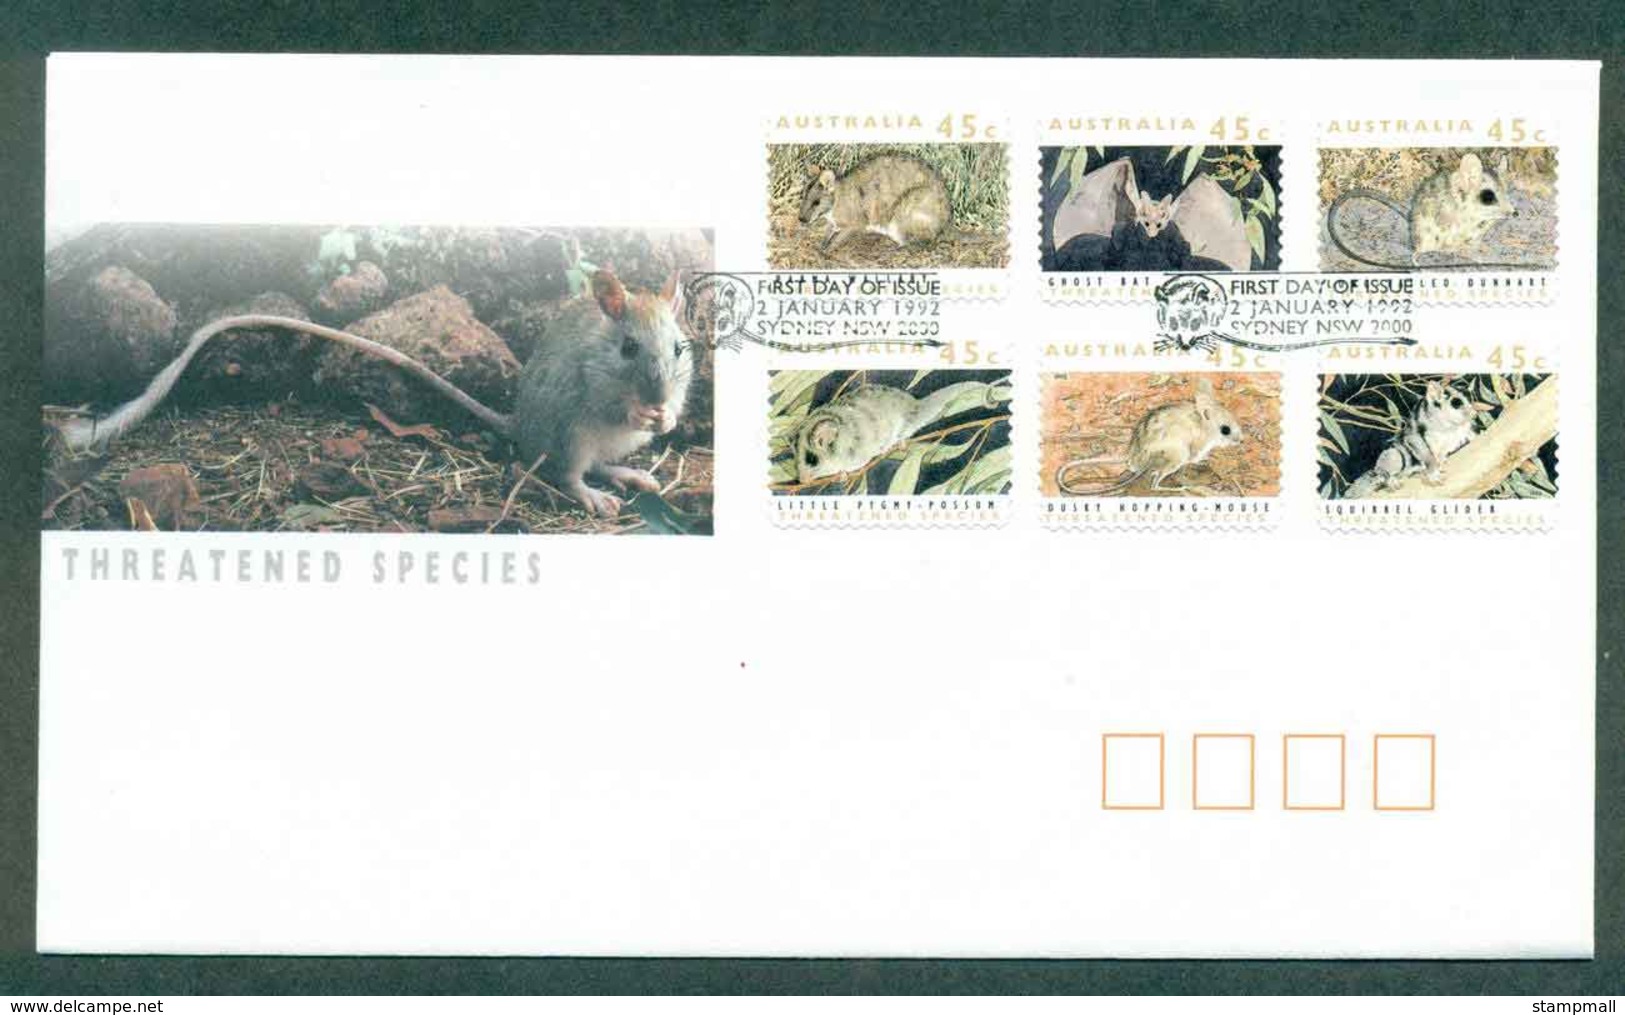 Australia 1992 Threatened Species P&S, Sydney FDC Lot51090 - Covers & Documents